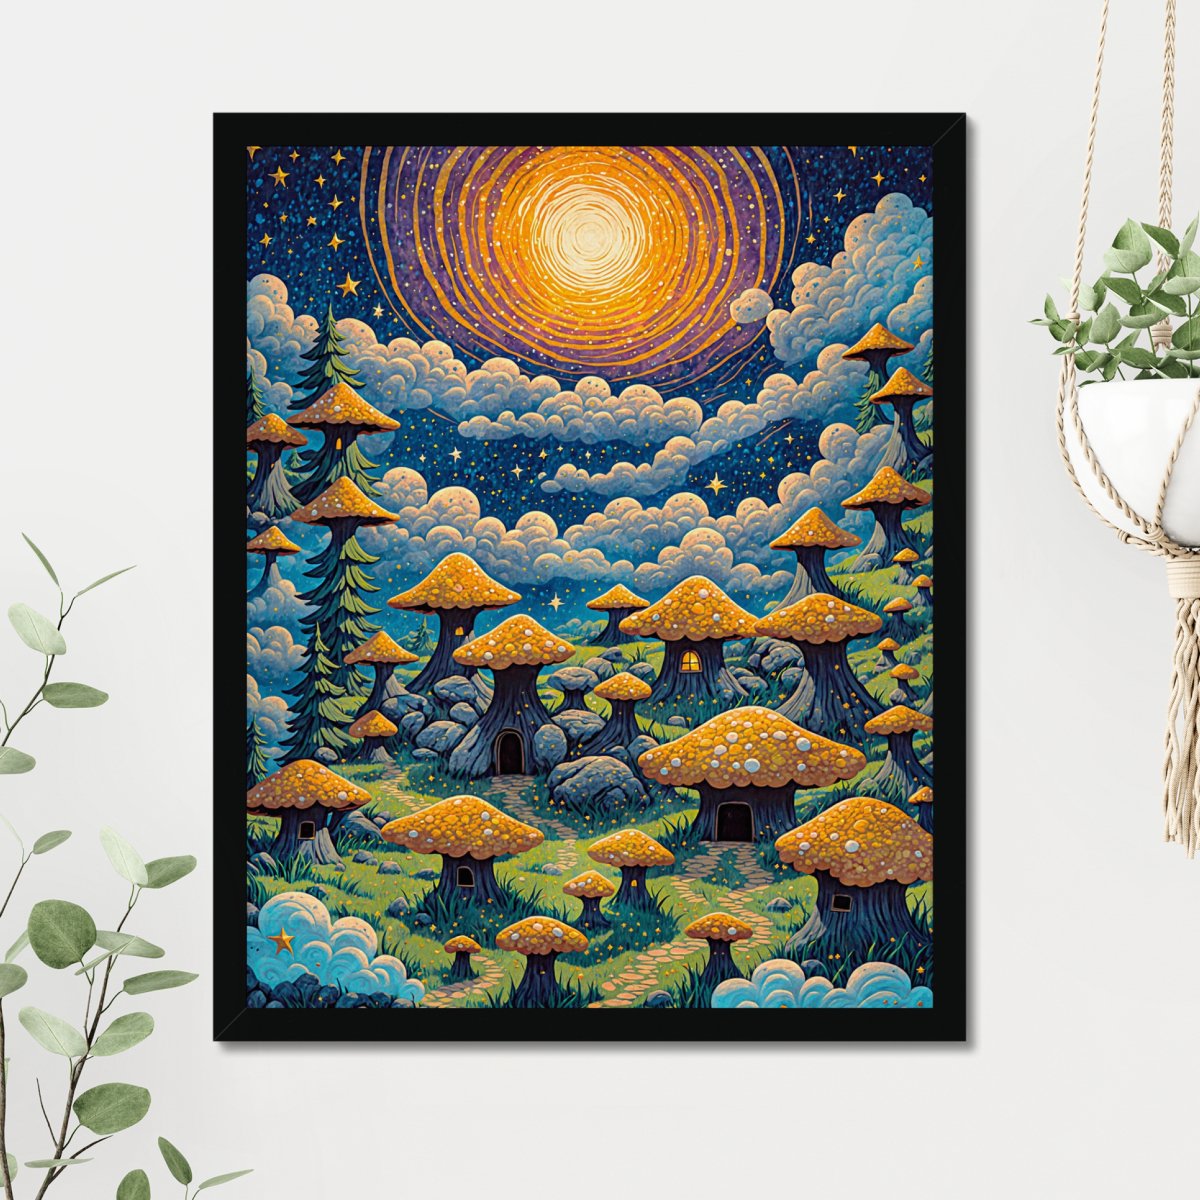 Jolly mushroom town - Art print - Poster - Ever colorful